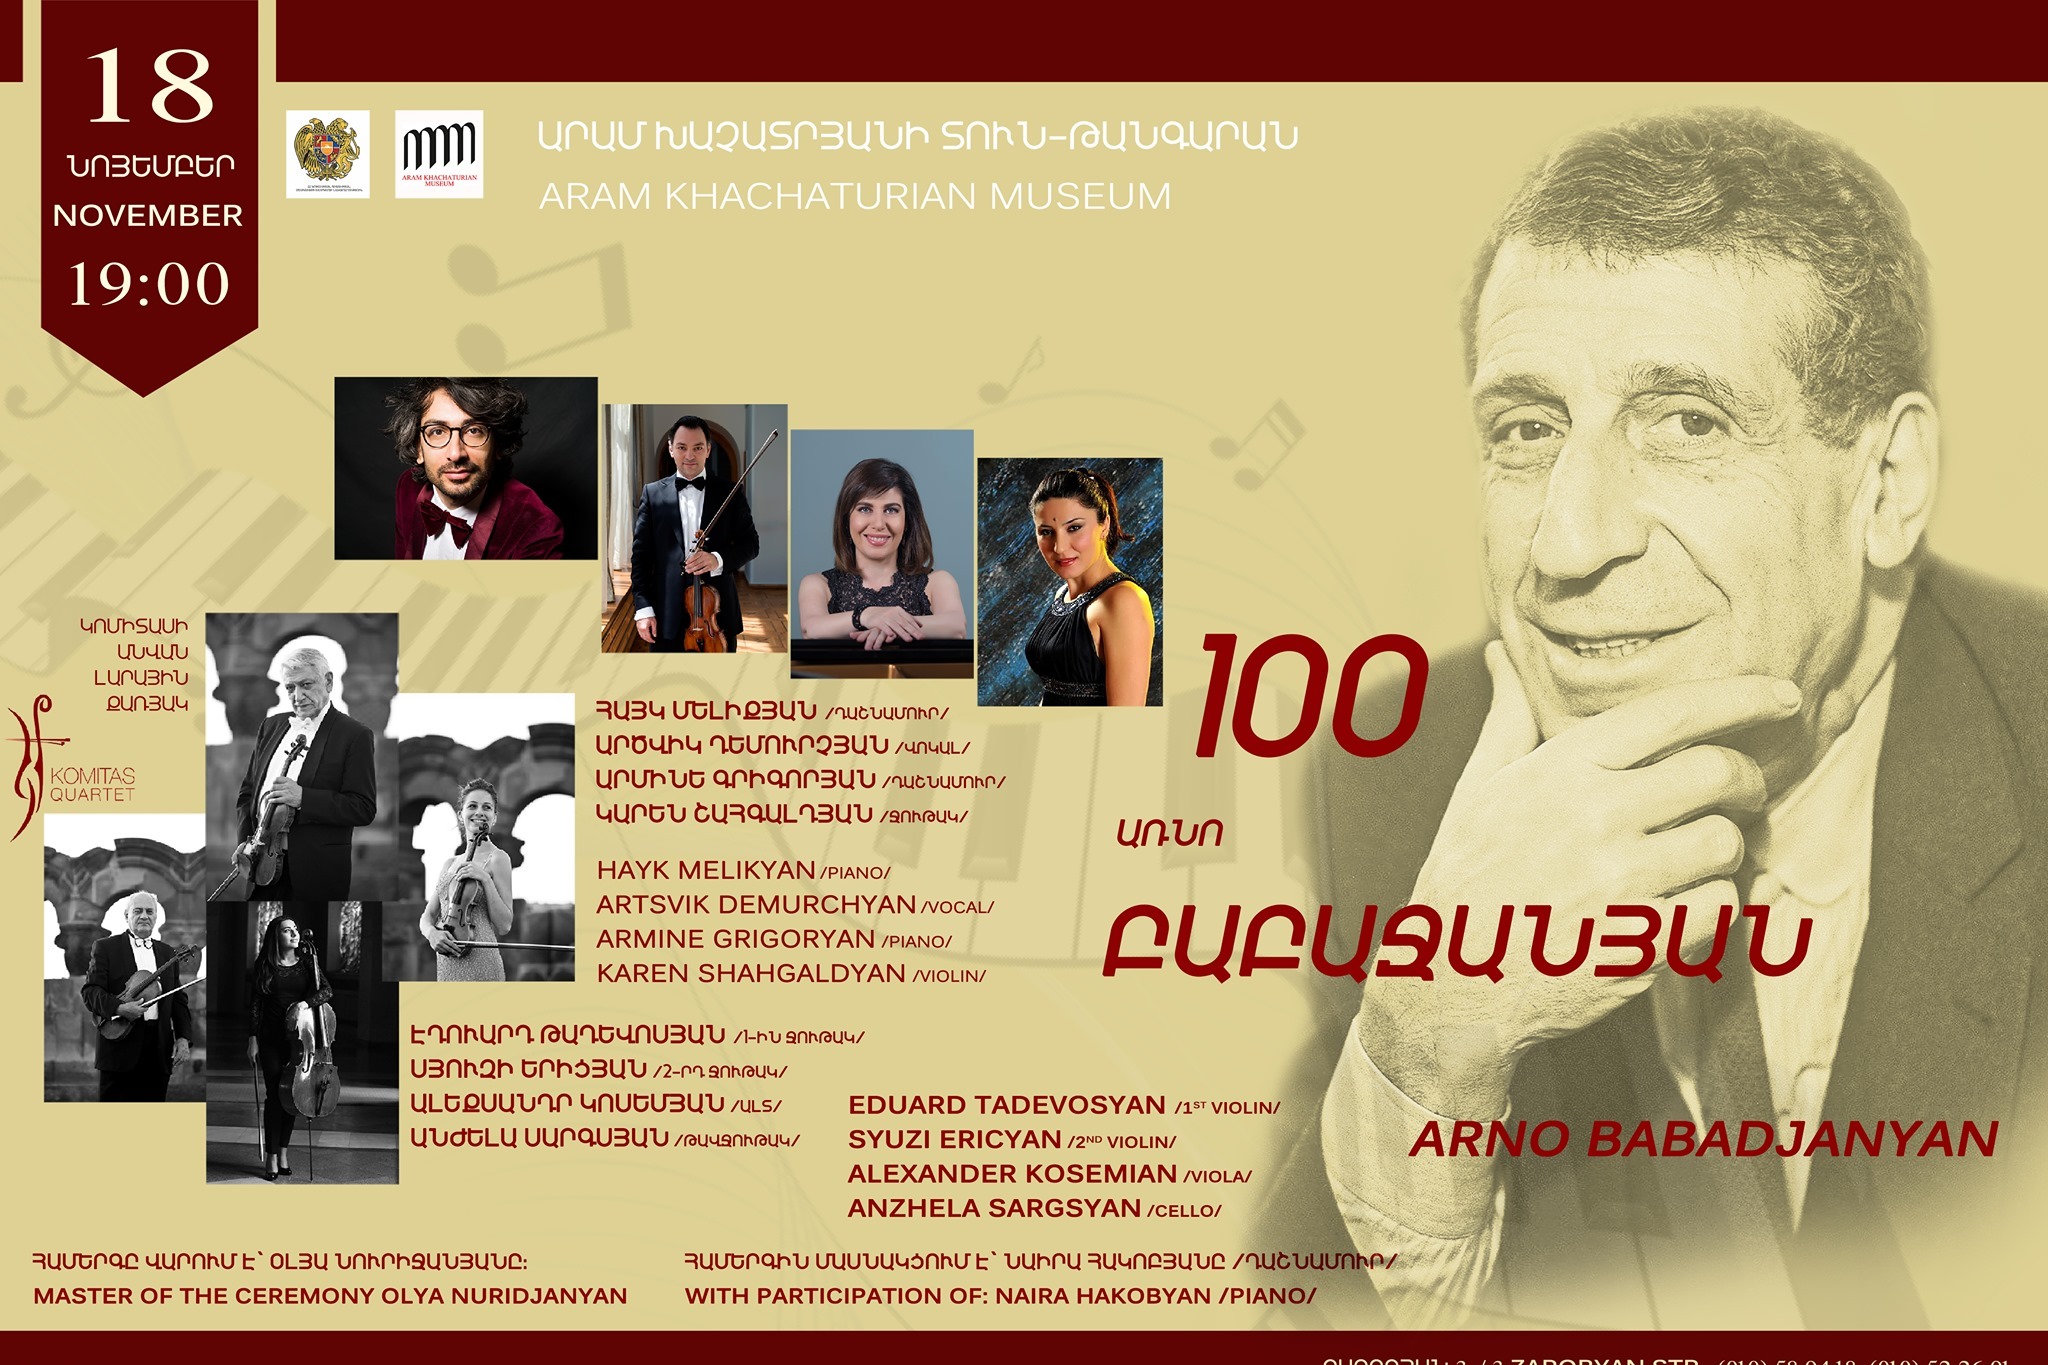 В доме-музее Арама Хачатуряна отметят 100-летний юбилей Арно Бабаджаняна 